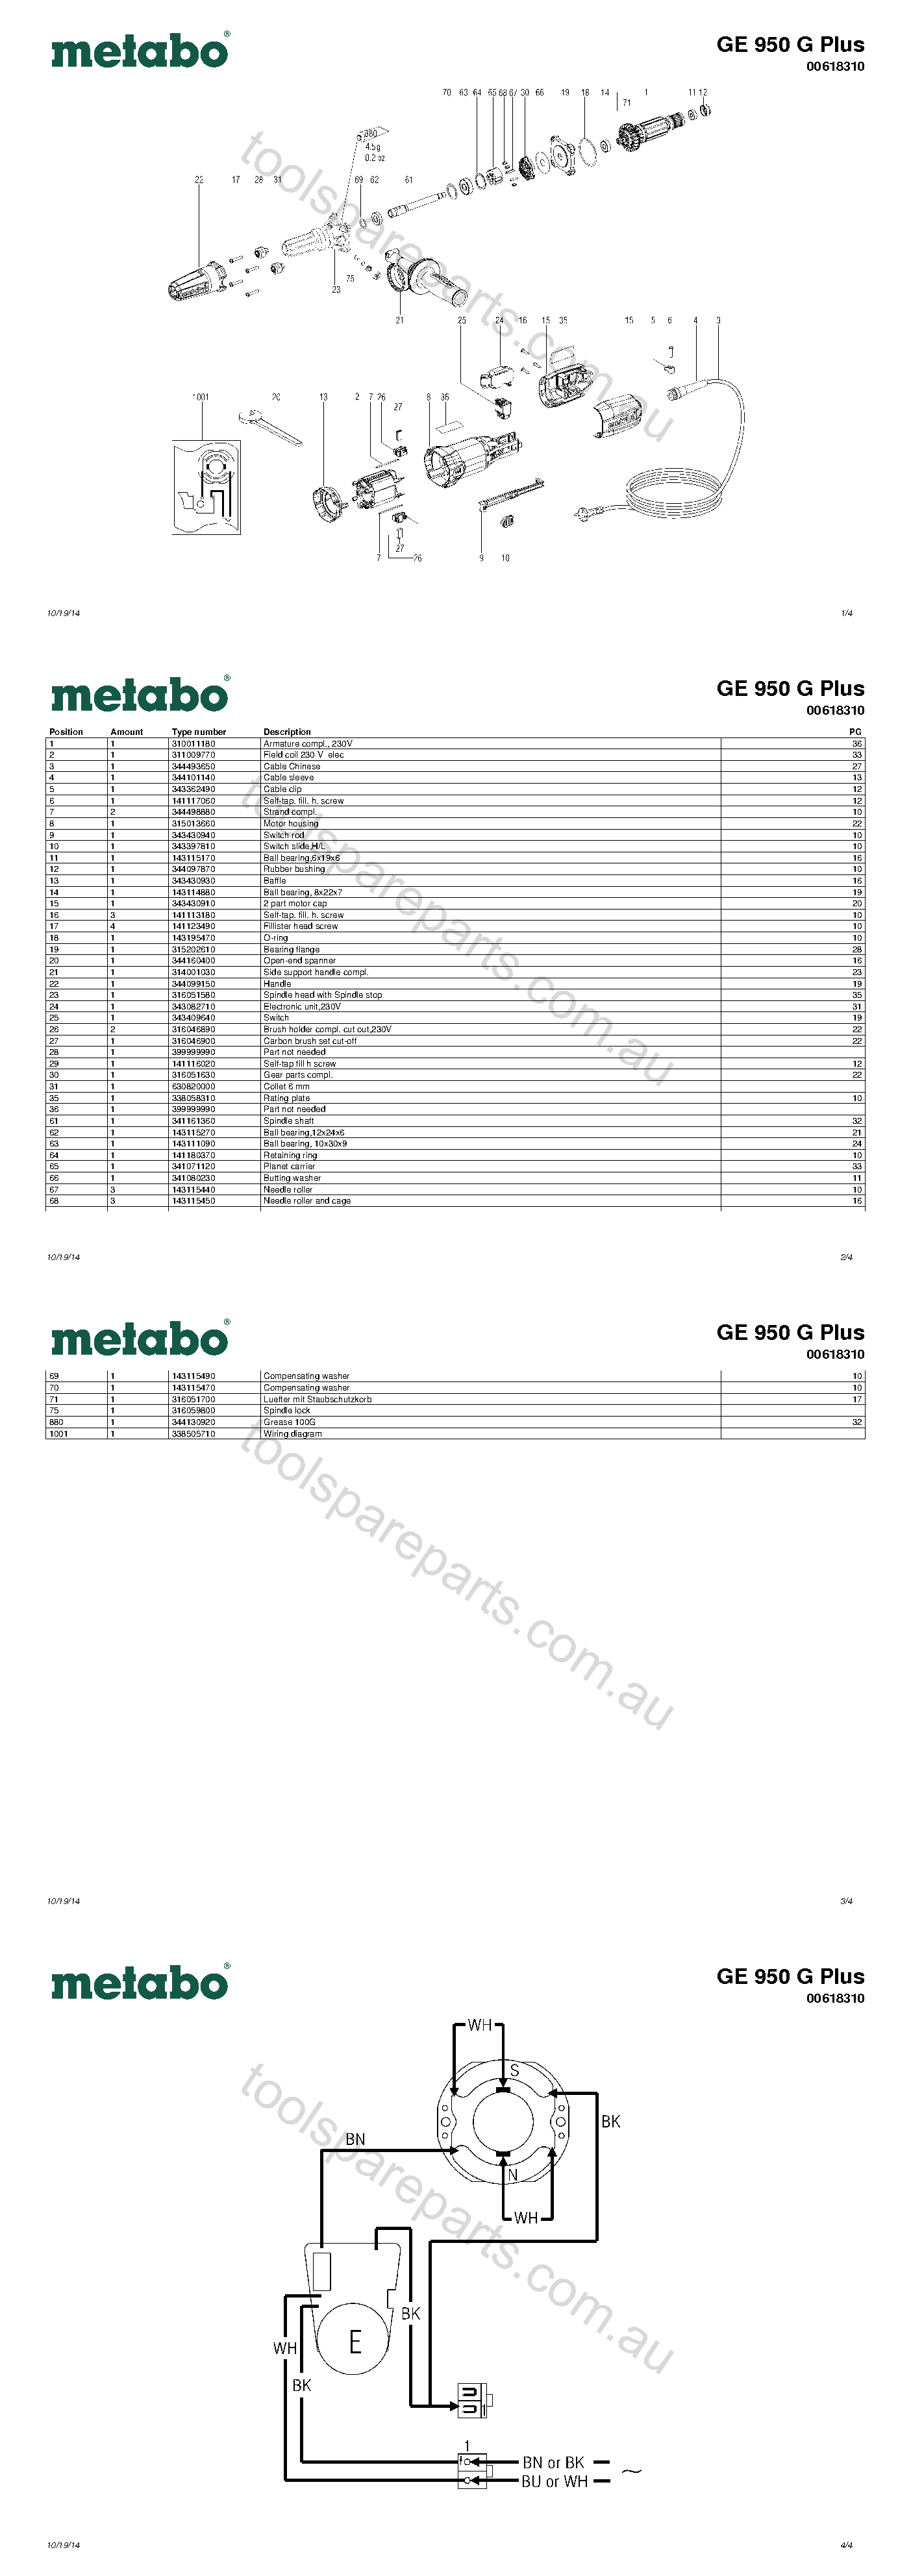 Metabo GE 950 G Plus 00618310  Diagram 1